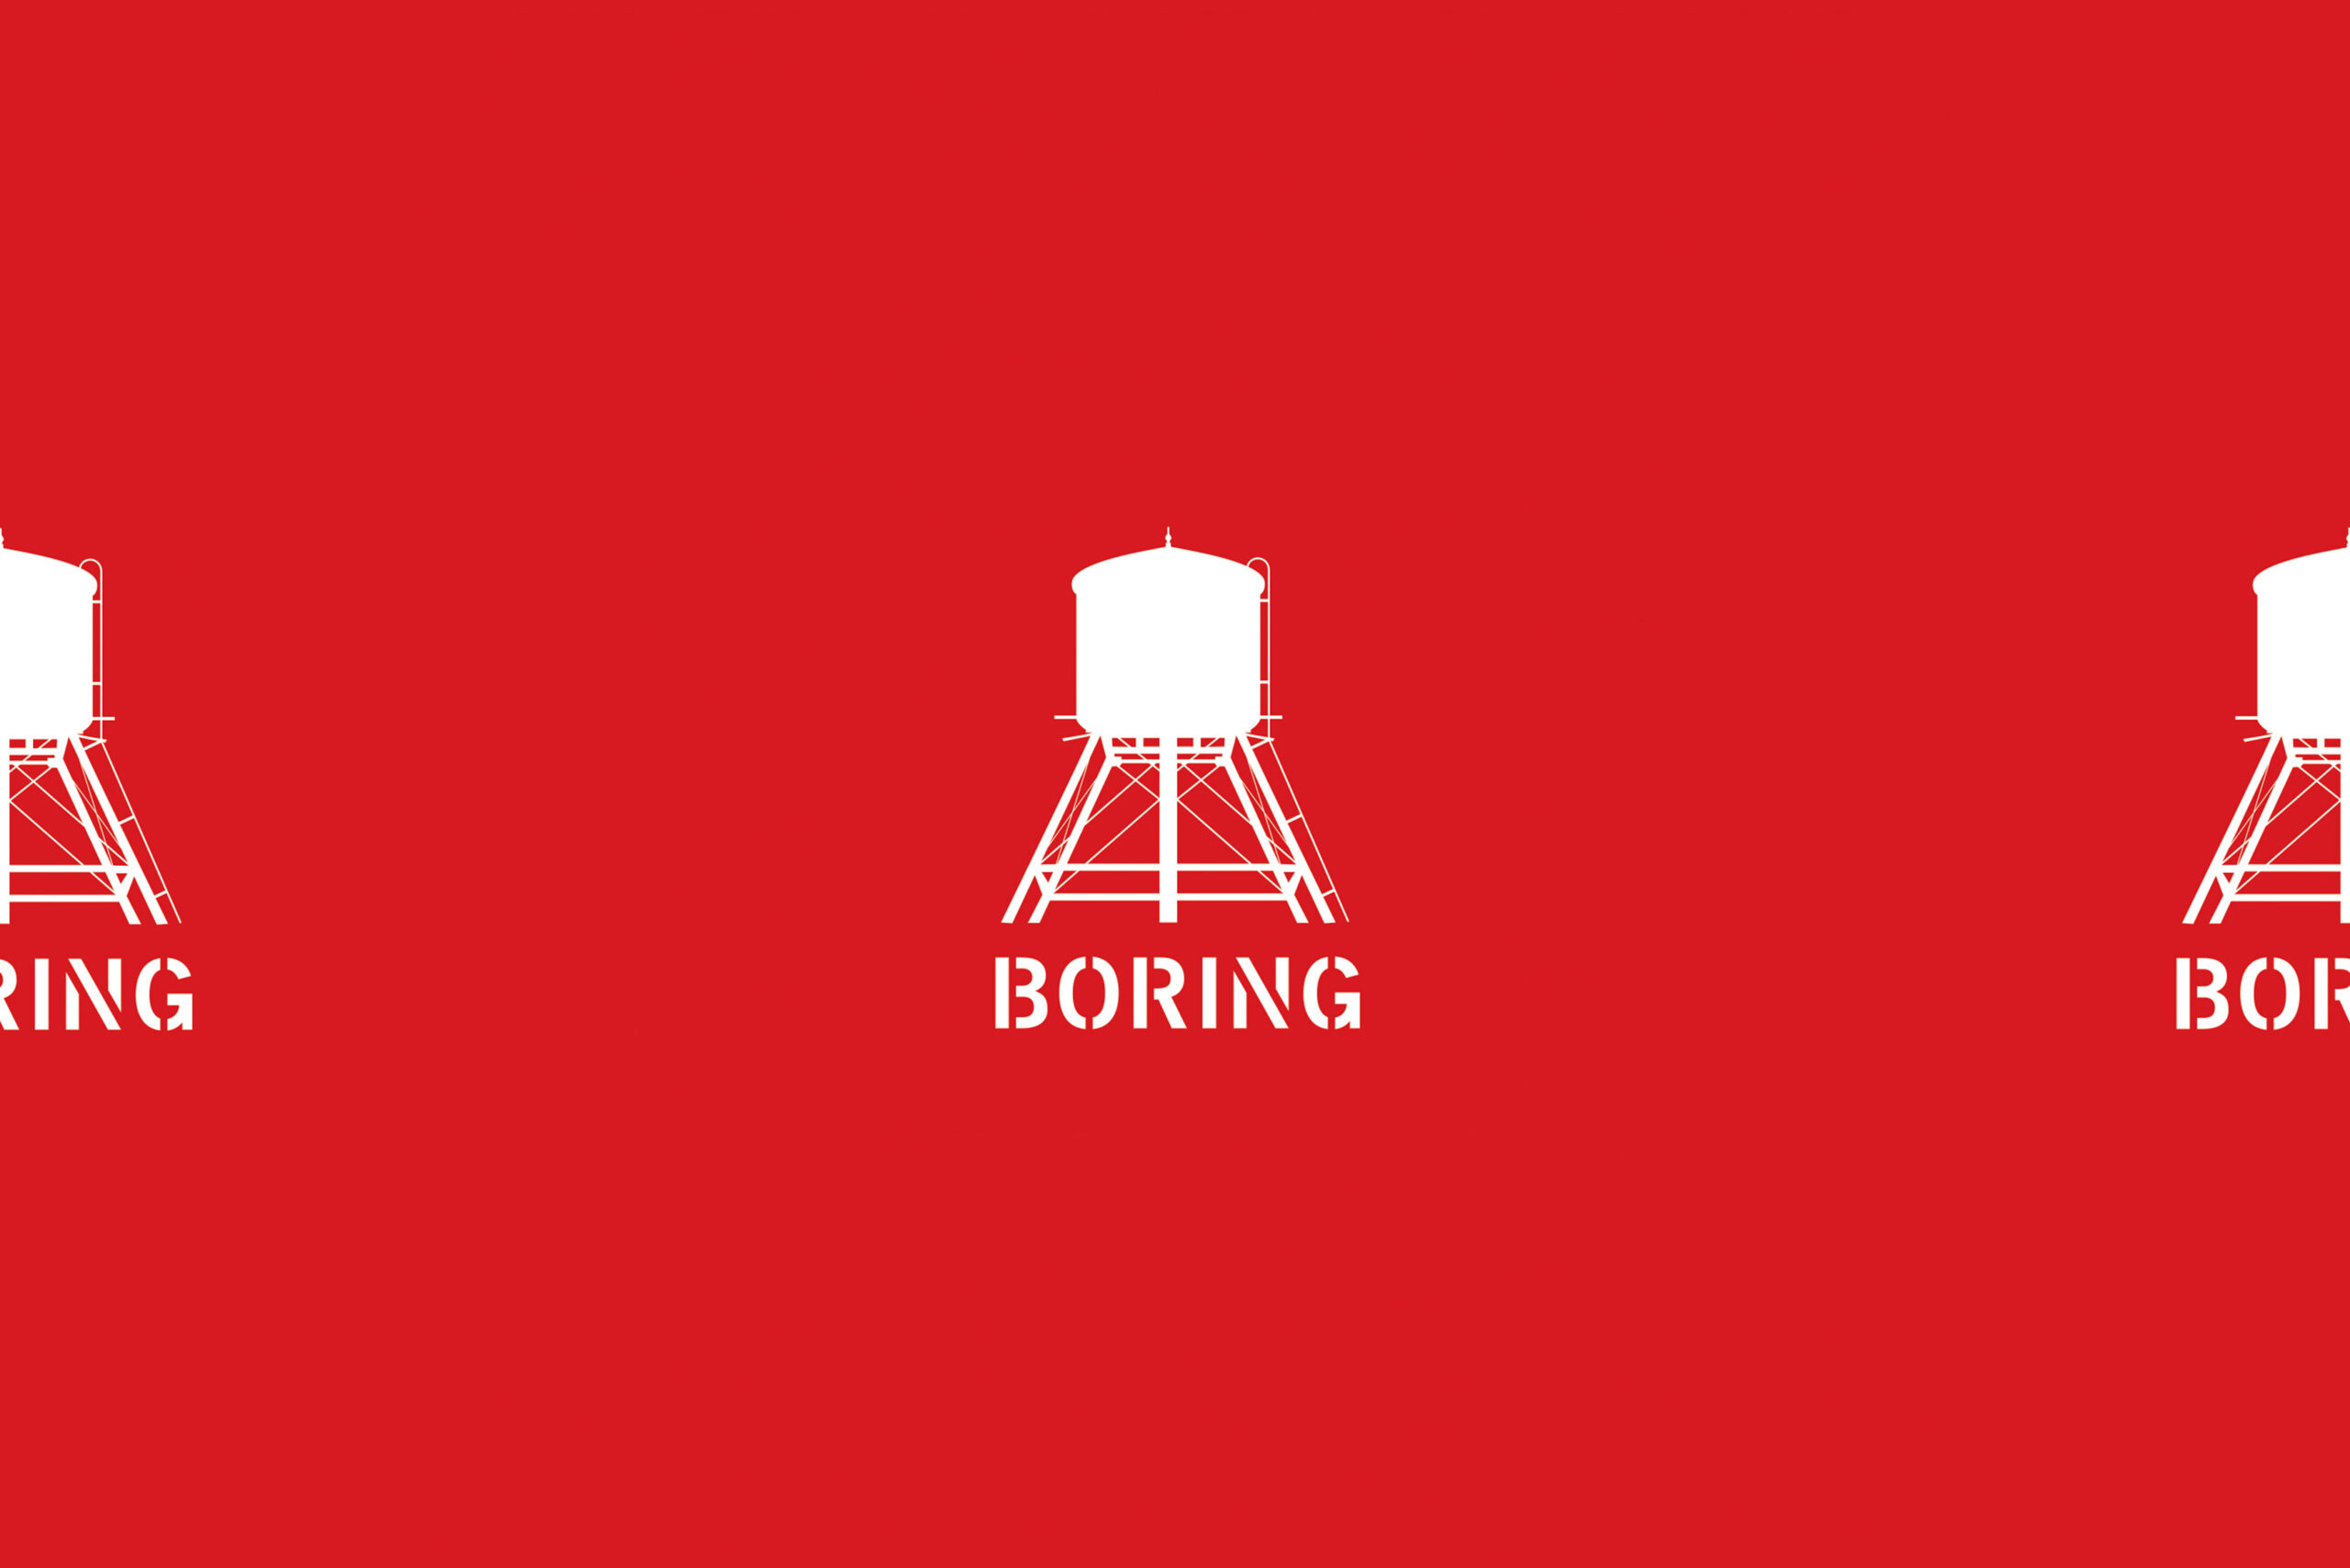 boring_NEW003-1